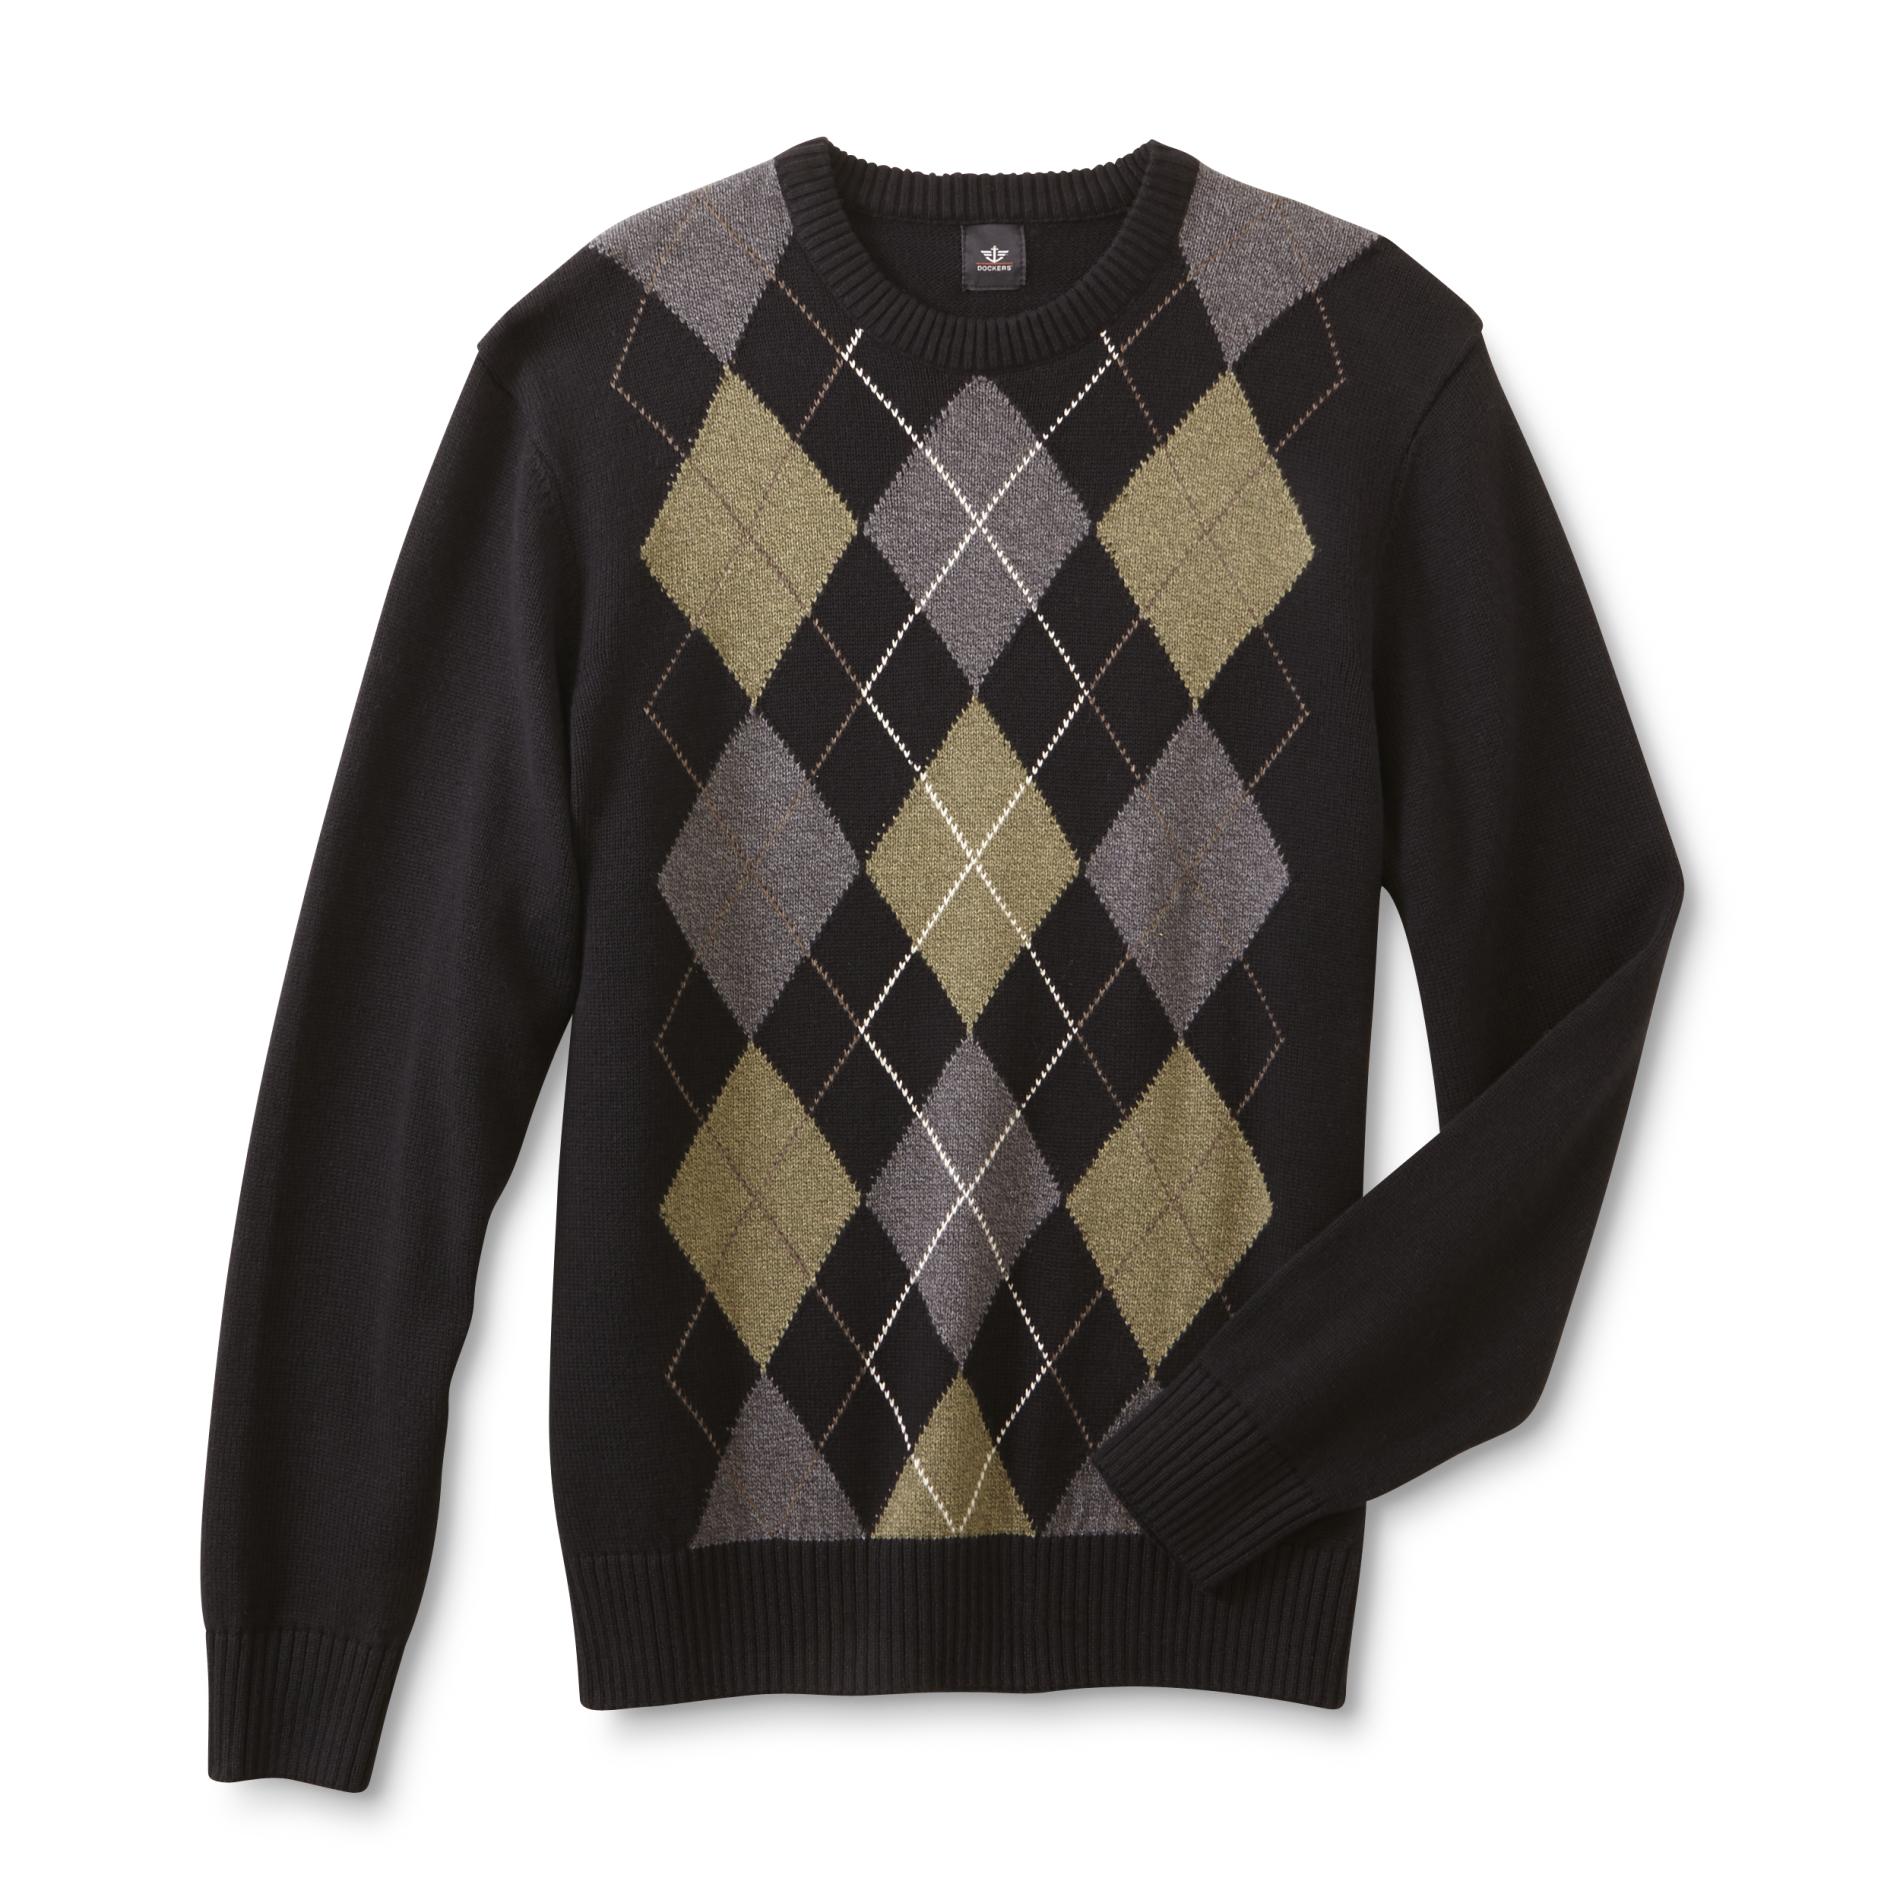 Dockers Men's Sweater - Argyle